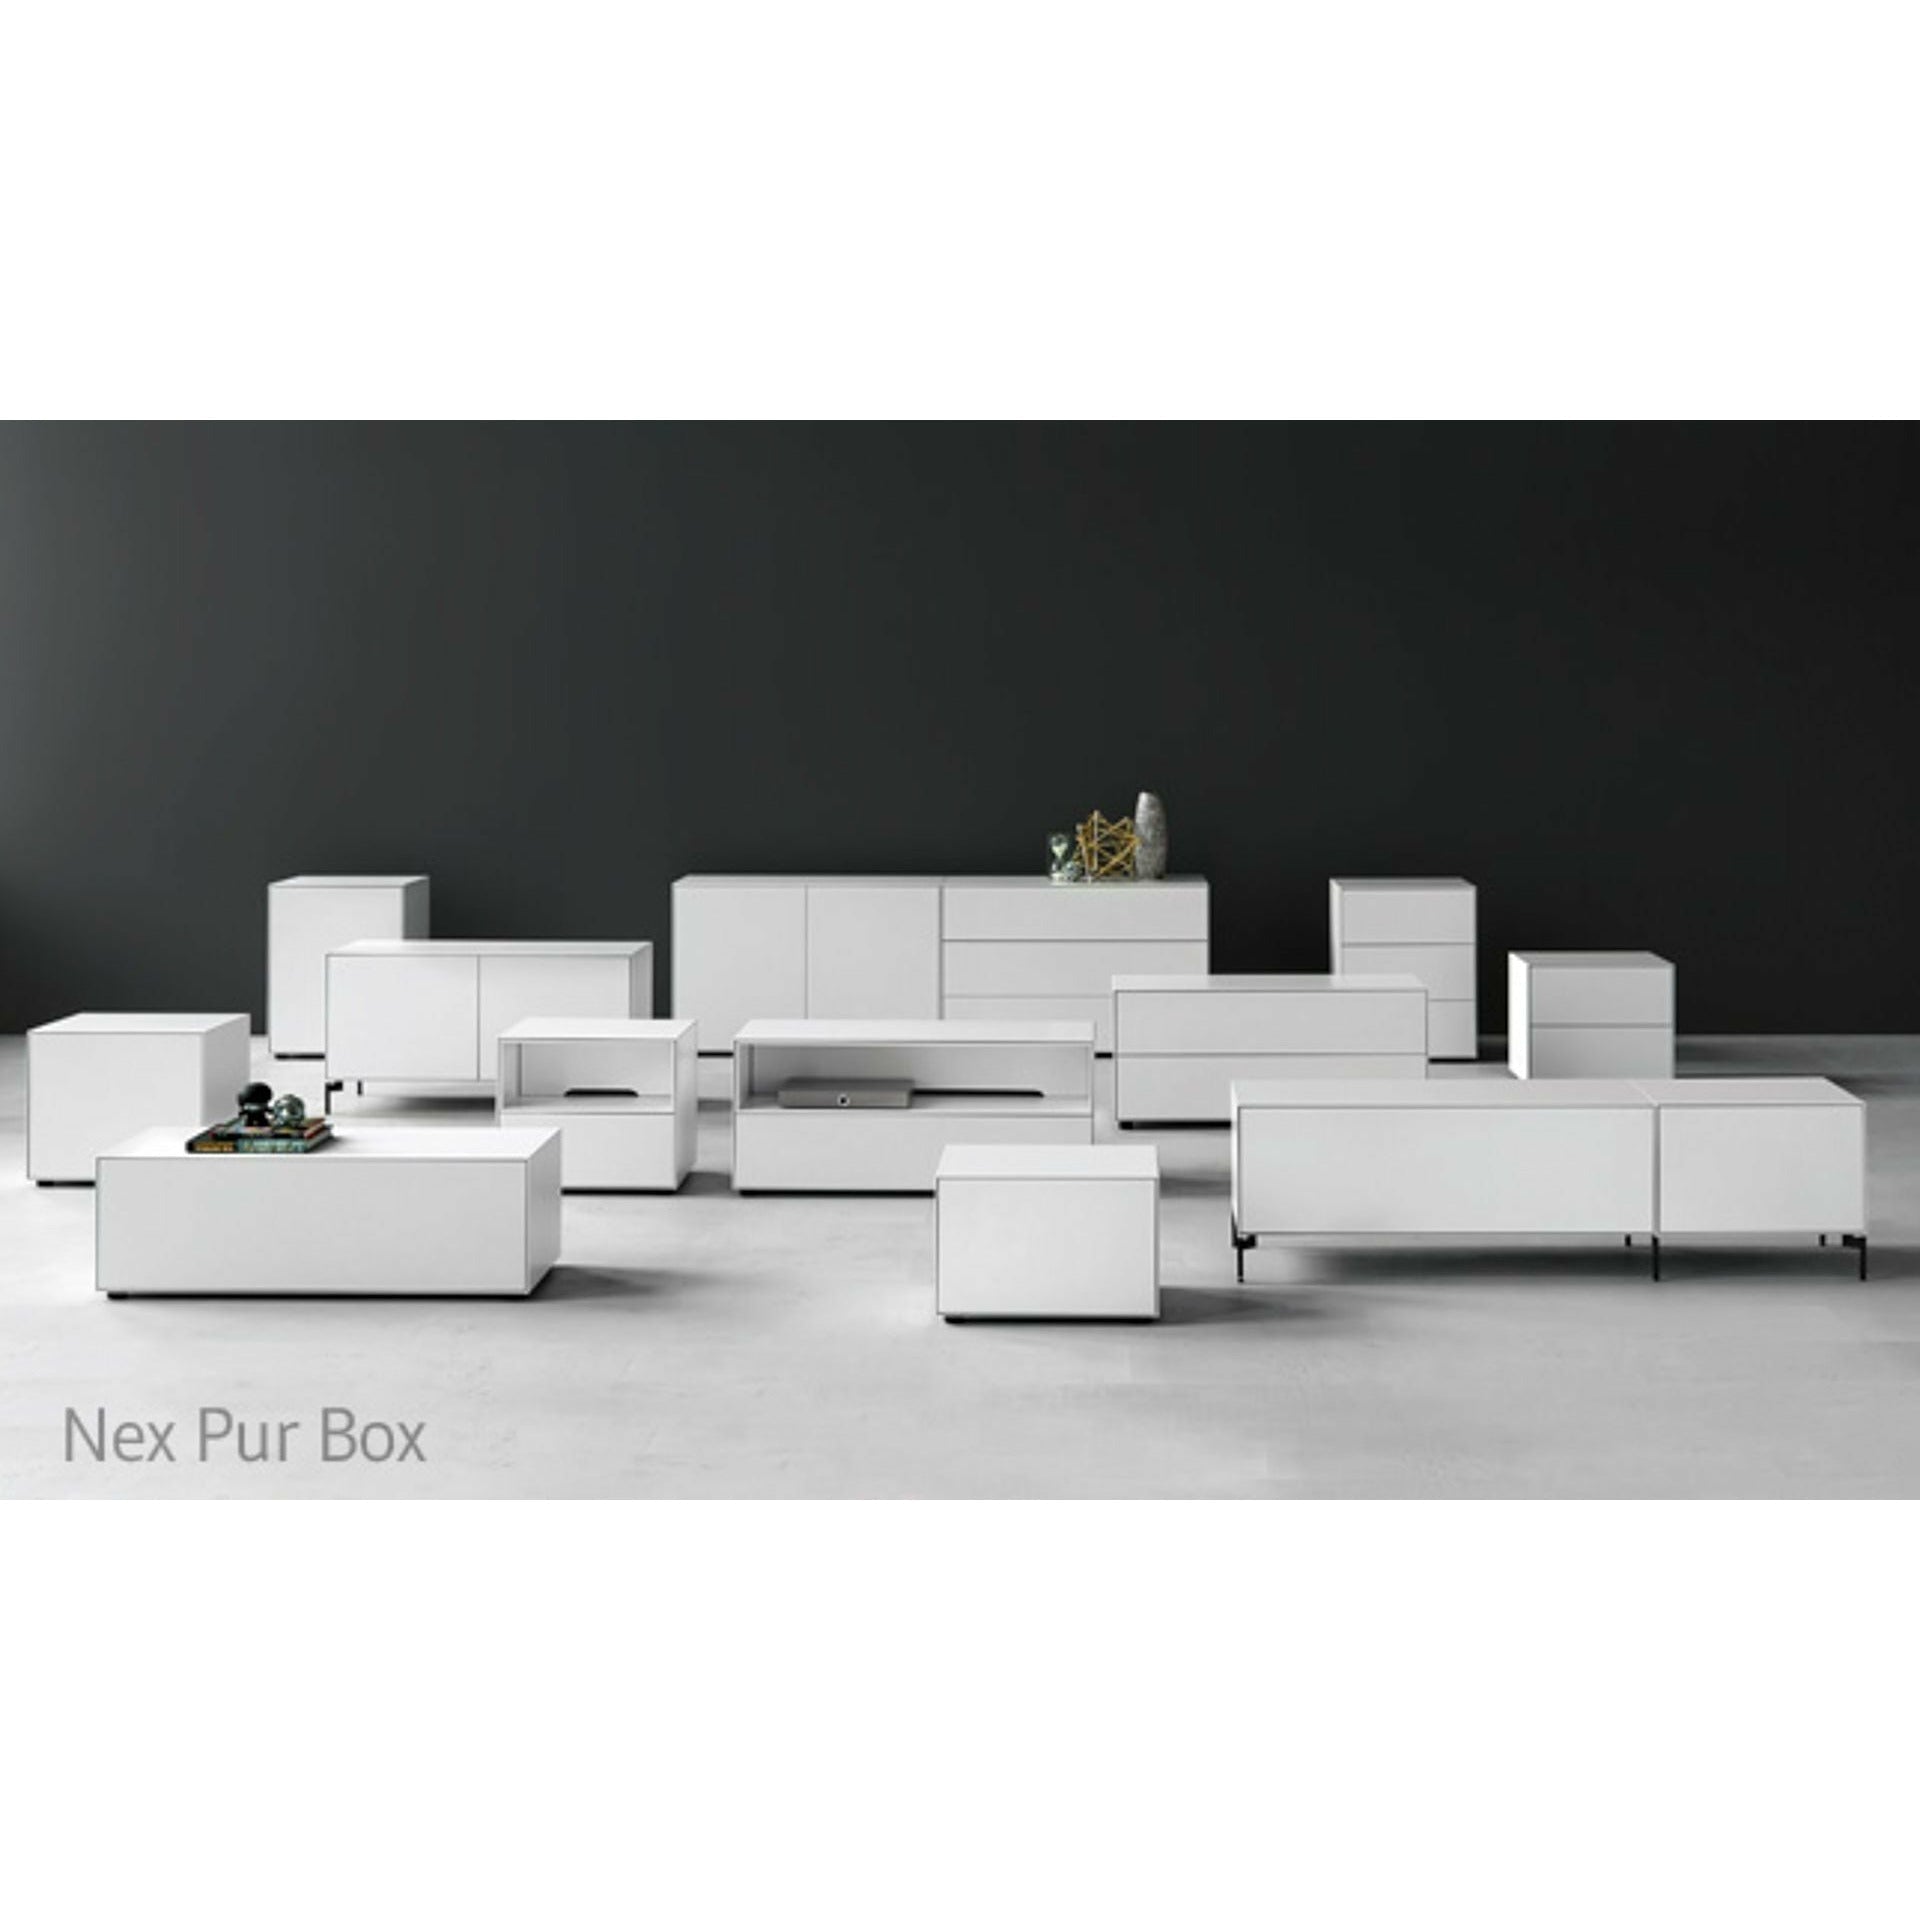 Piure Nex Pur Box Door Hx W 50x180 Cm, 1 Shelf